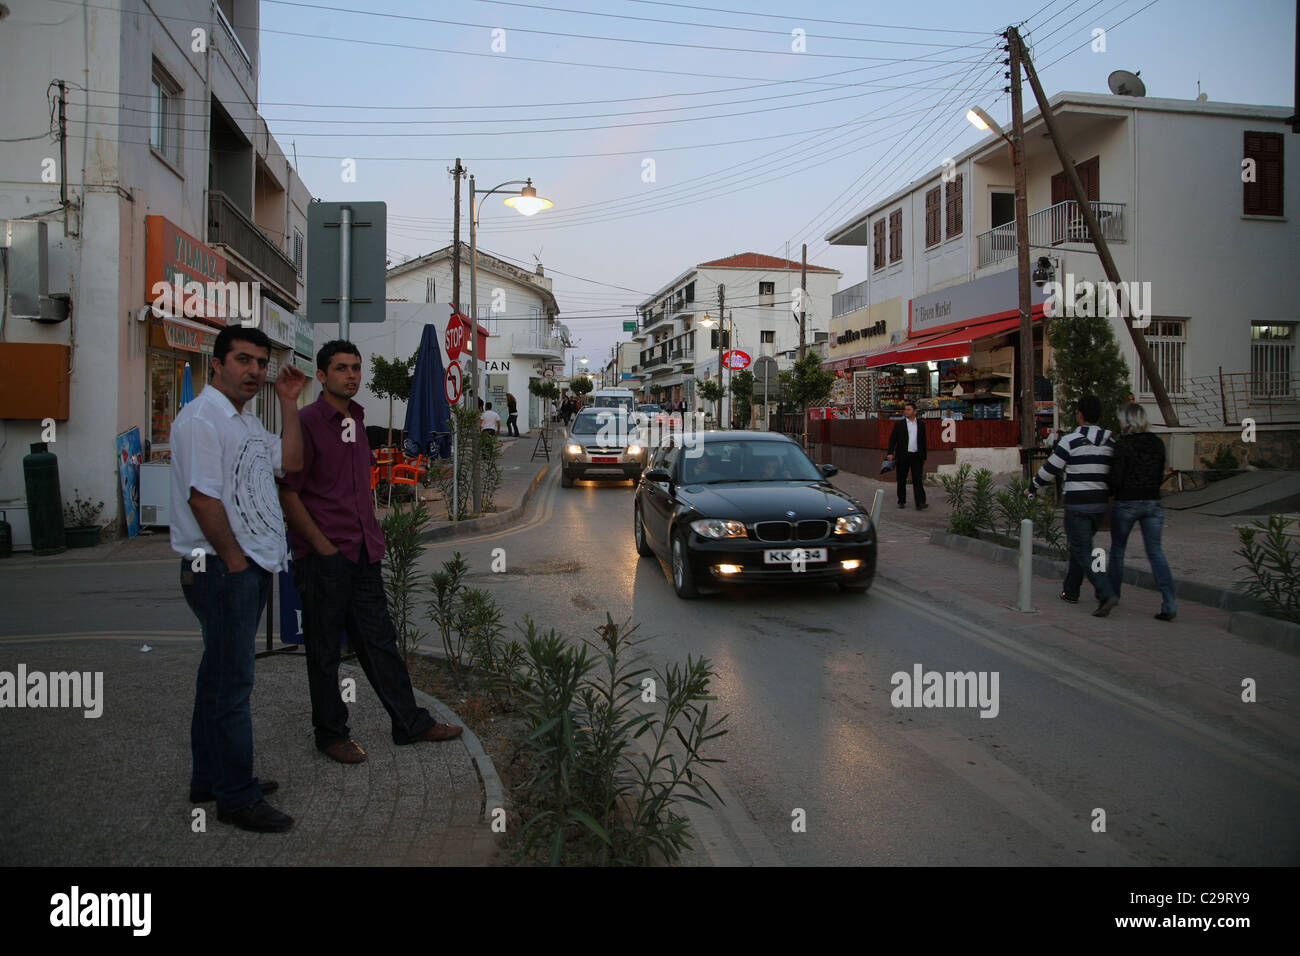 Street scene in the Old Town, Kyrenia, Turkish Republic of Northern Cyprus Stock Photo